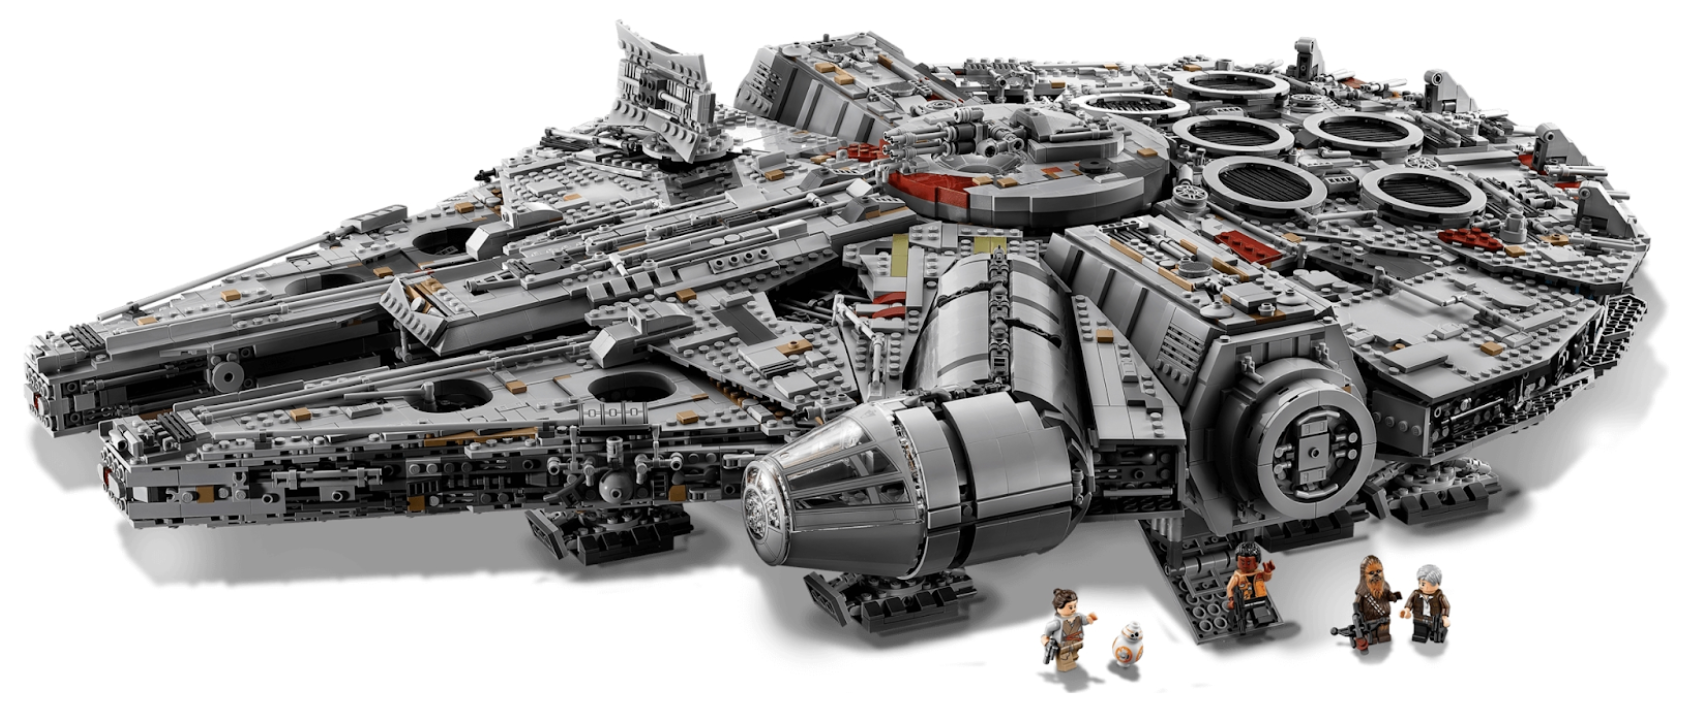 LEGO Star Wars Millennium Falcon - Assembled